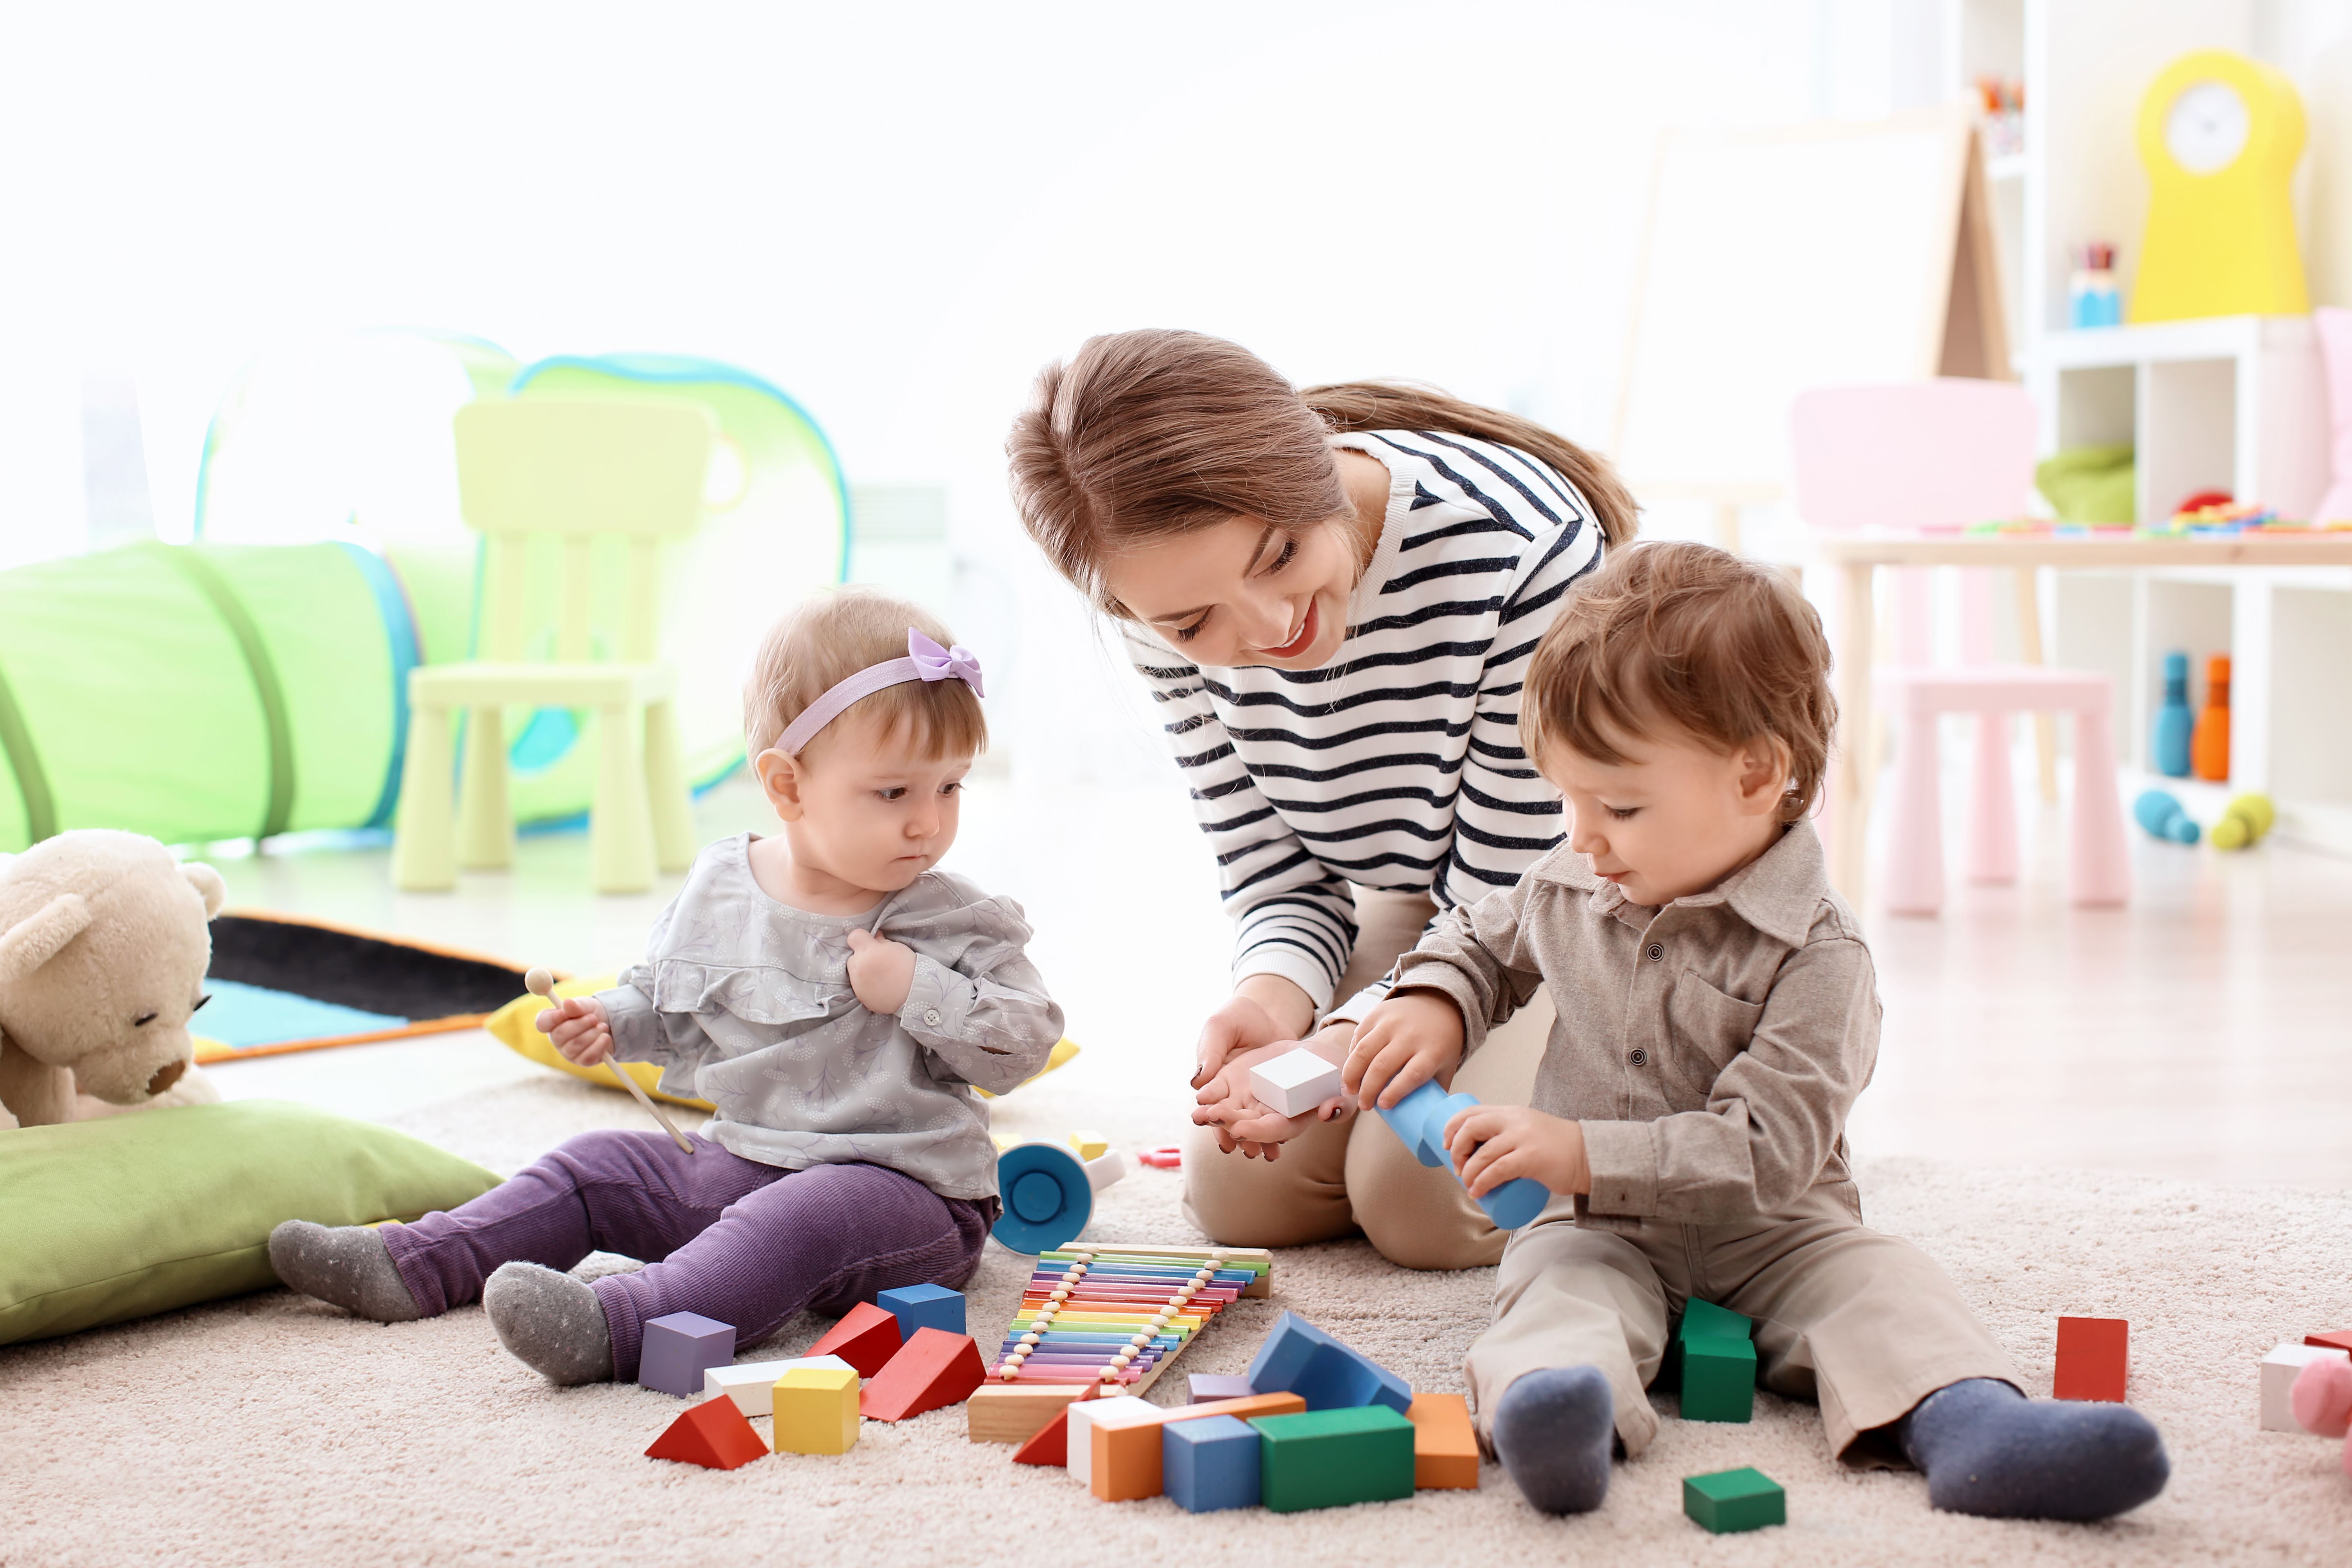 A woman babysitting children | Source: Shutterstock